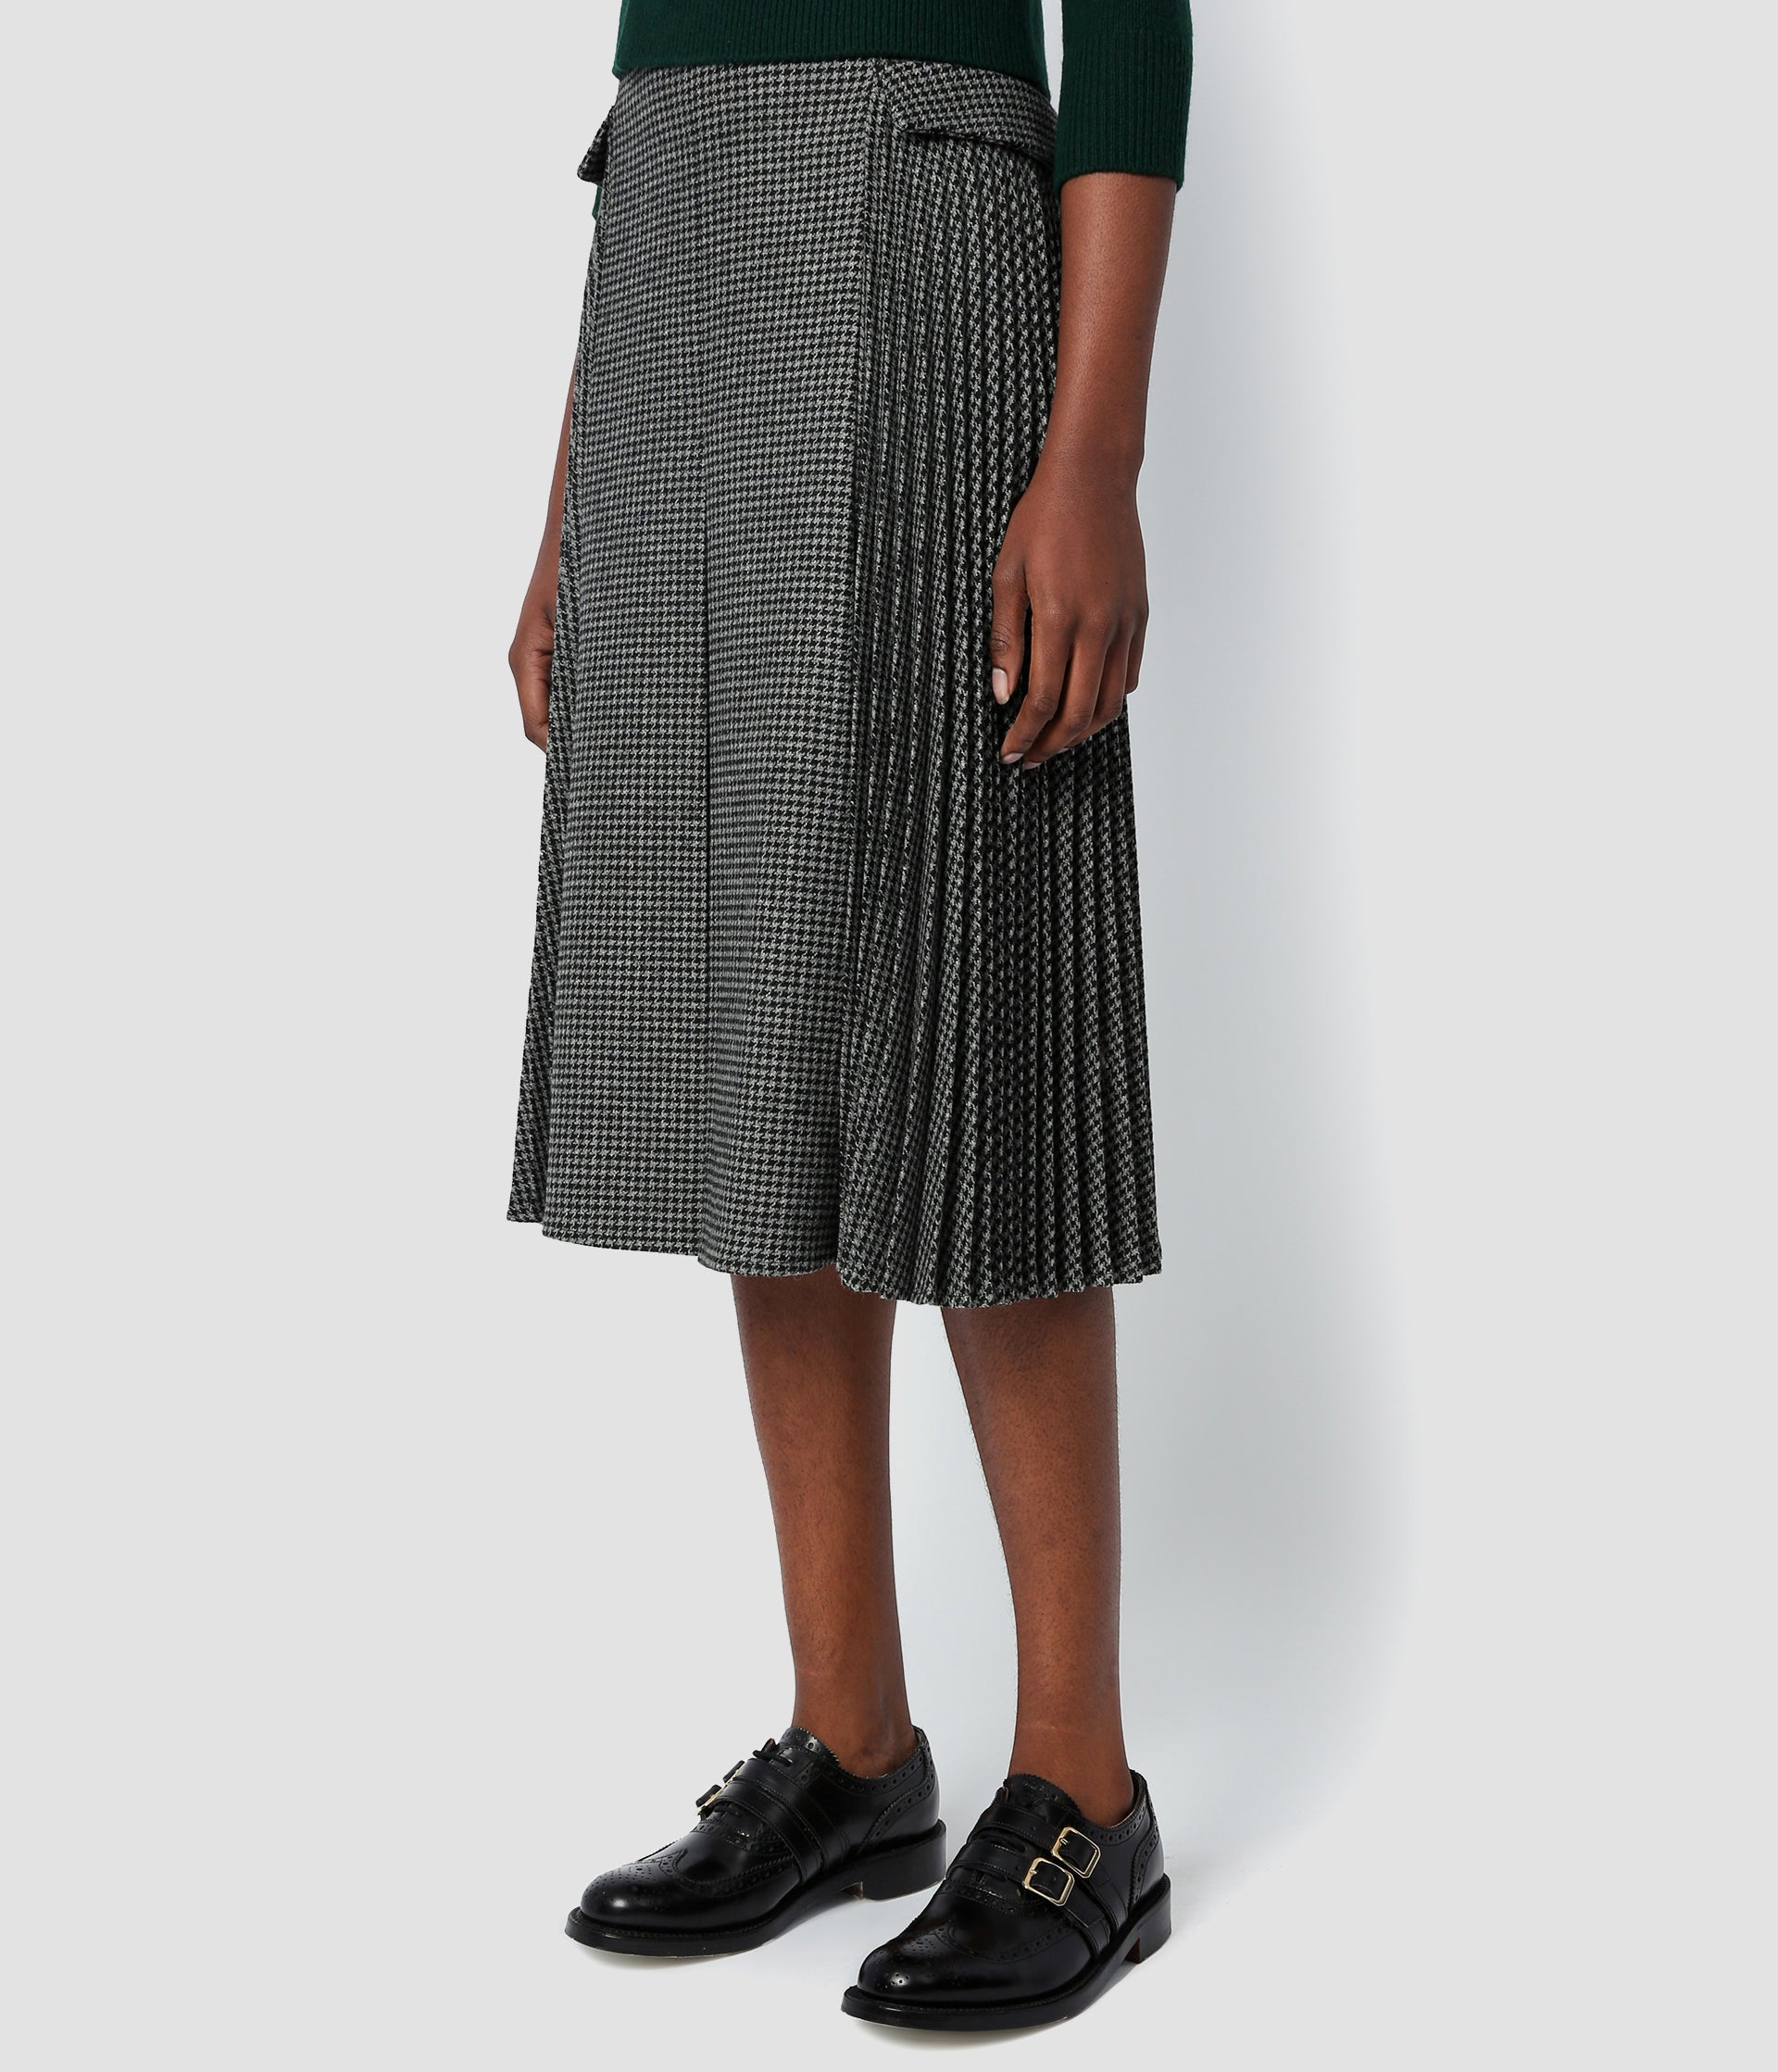 Fashion Casual Streetwear Pleated Skirt Women Winter Wool Short Skirts A- line Mini Jupe Femme Saia Kawaii School Skater Skirt Black @ Best Price  Online | Jumia Egypt